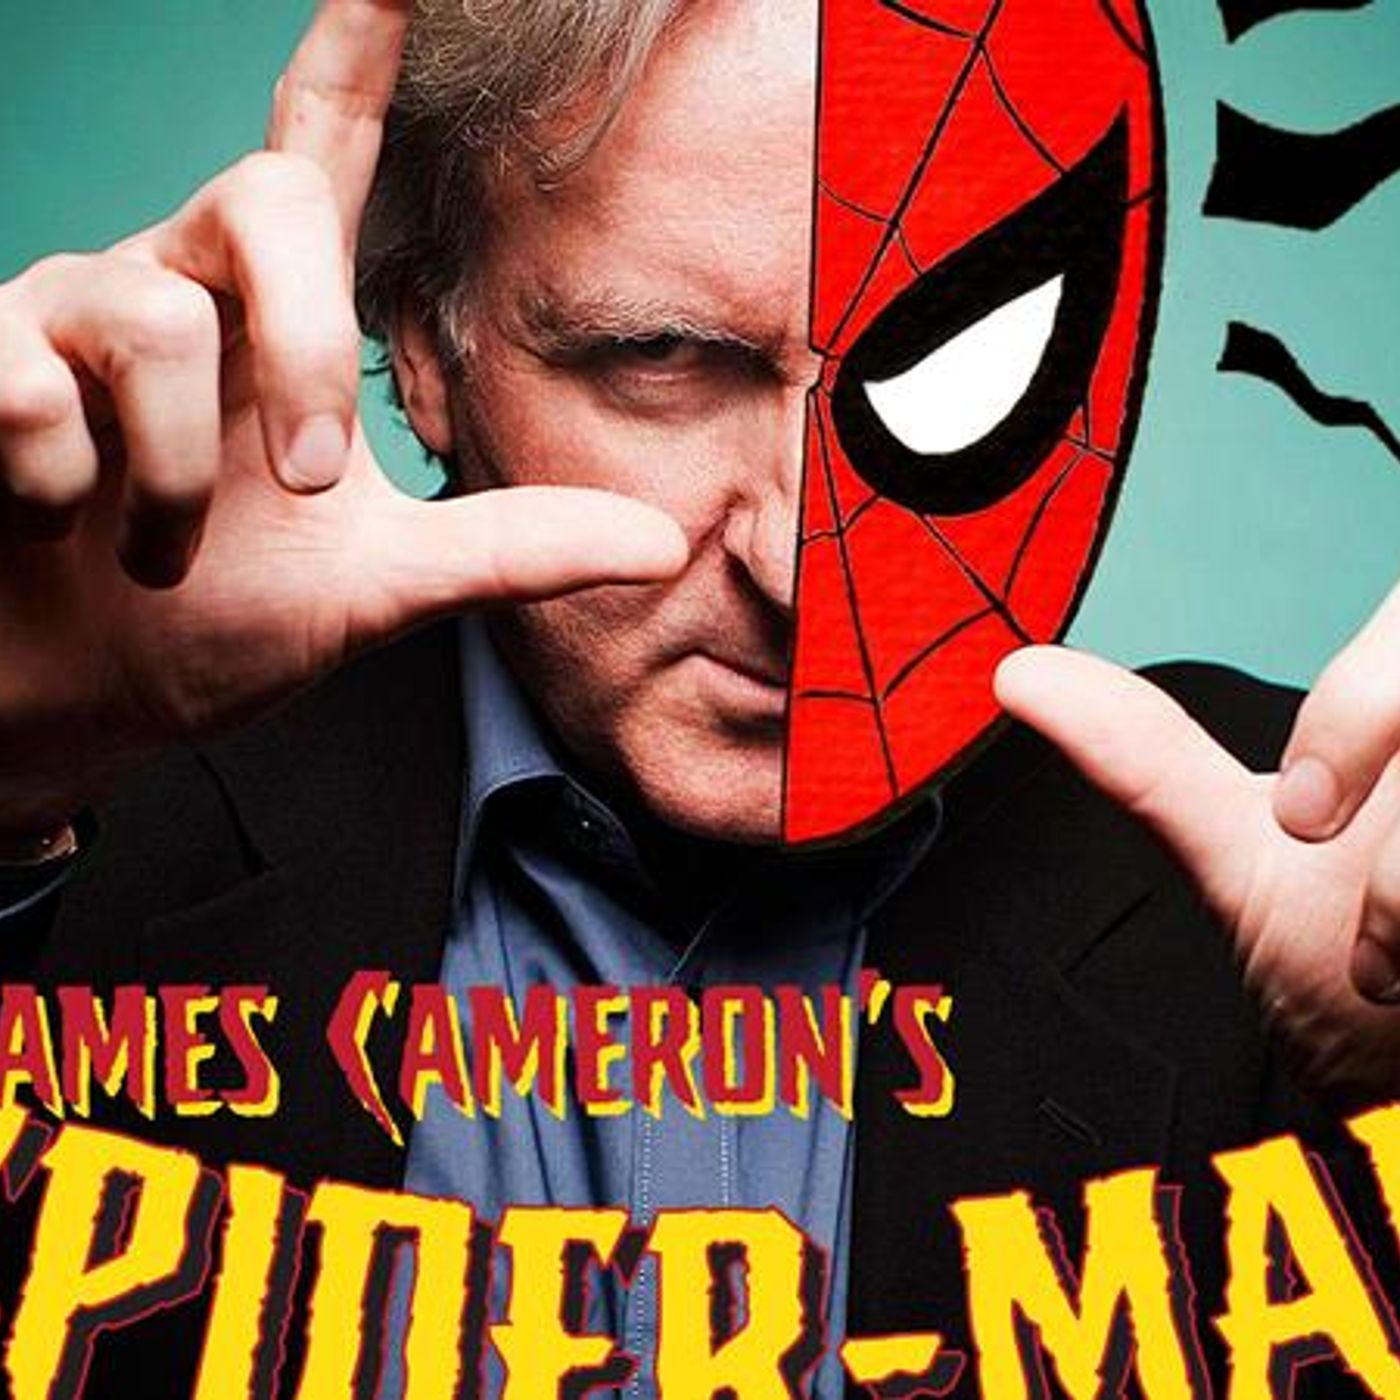 57: James Cameron's Spider-Man, Part 3